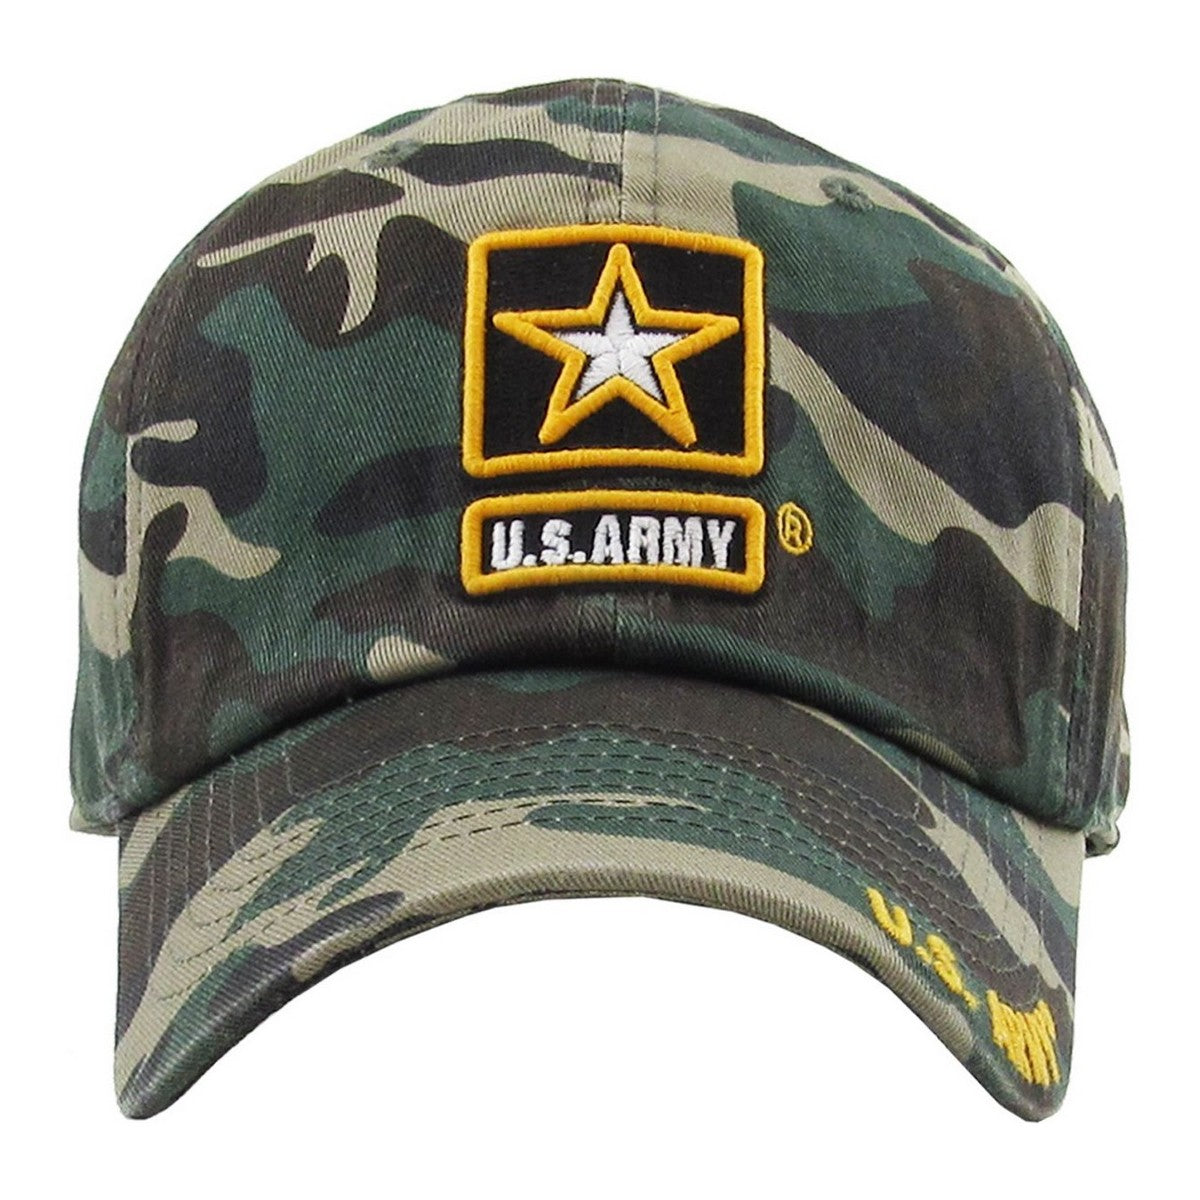 US ARMY Baseball Cap - Grøn Camo - Baseball Cap fra Ethos hos The Prince Webshop